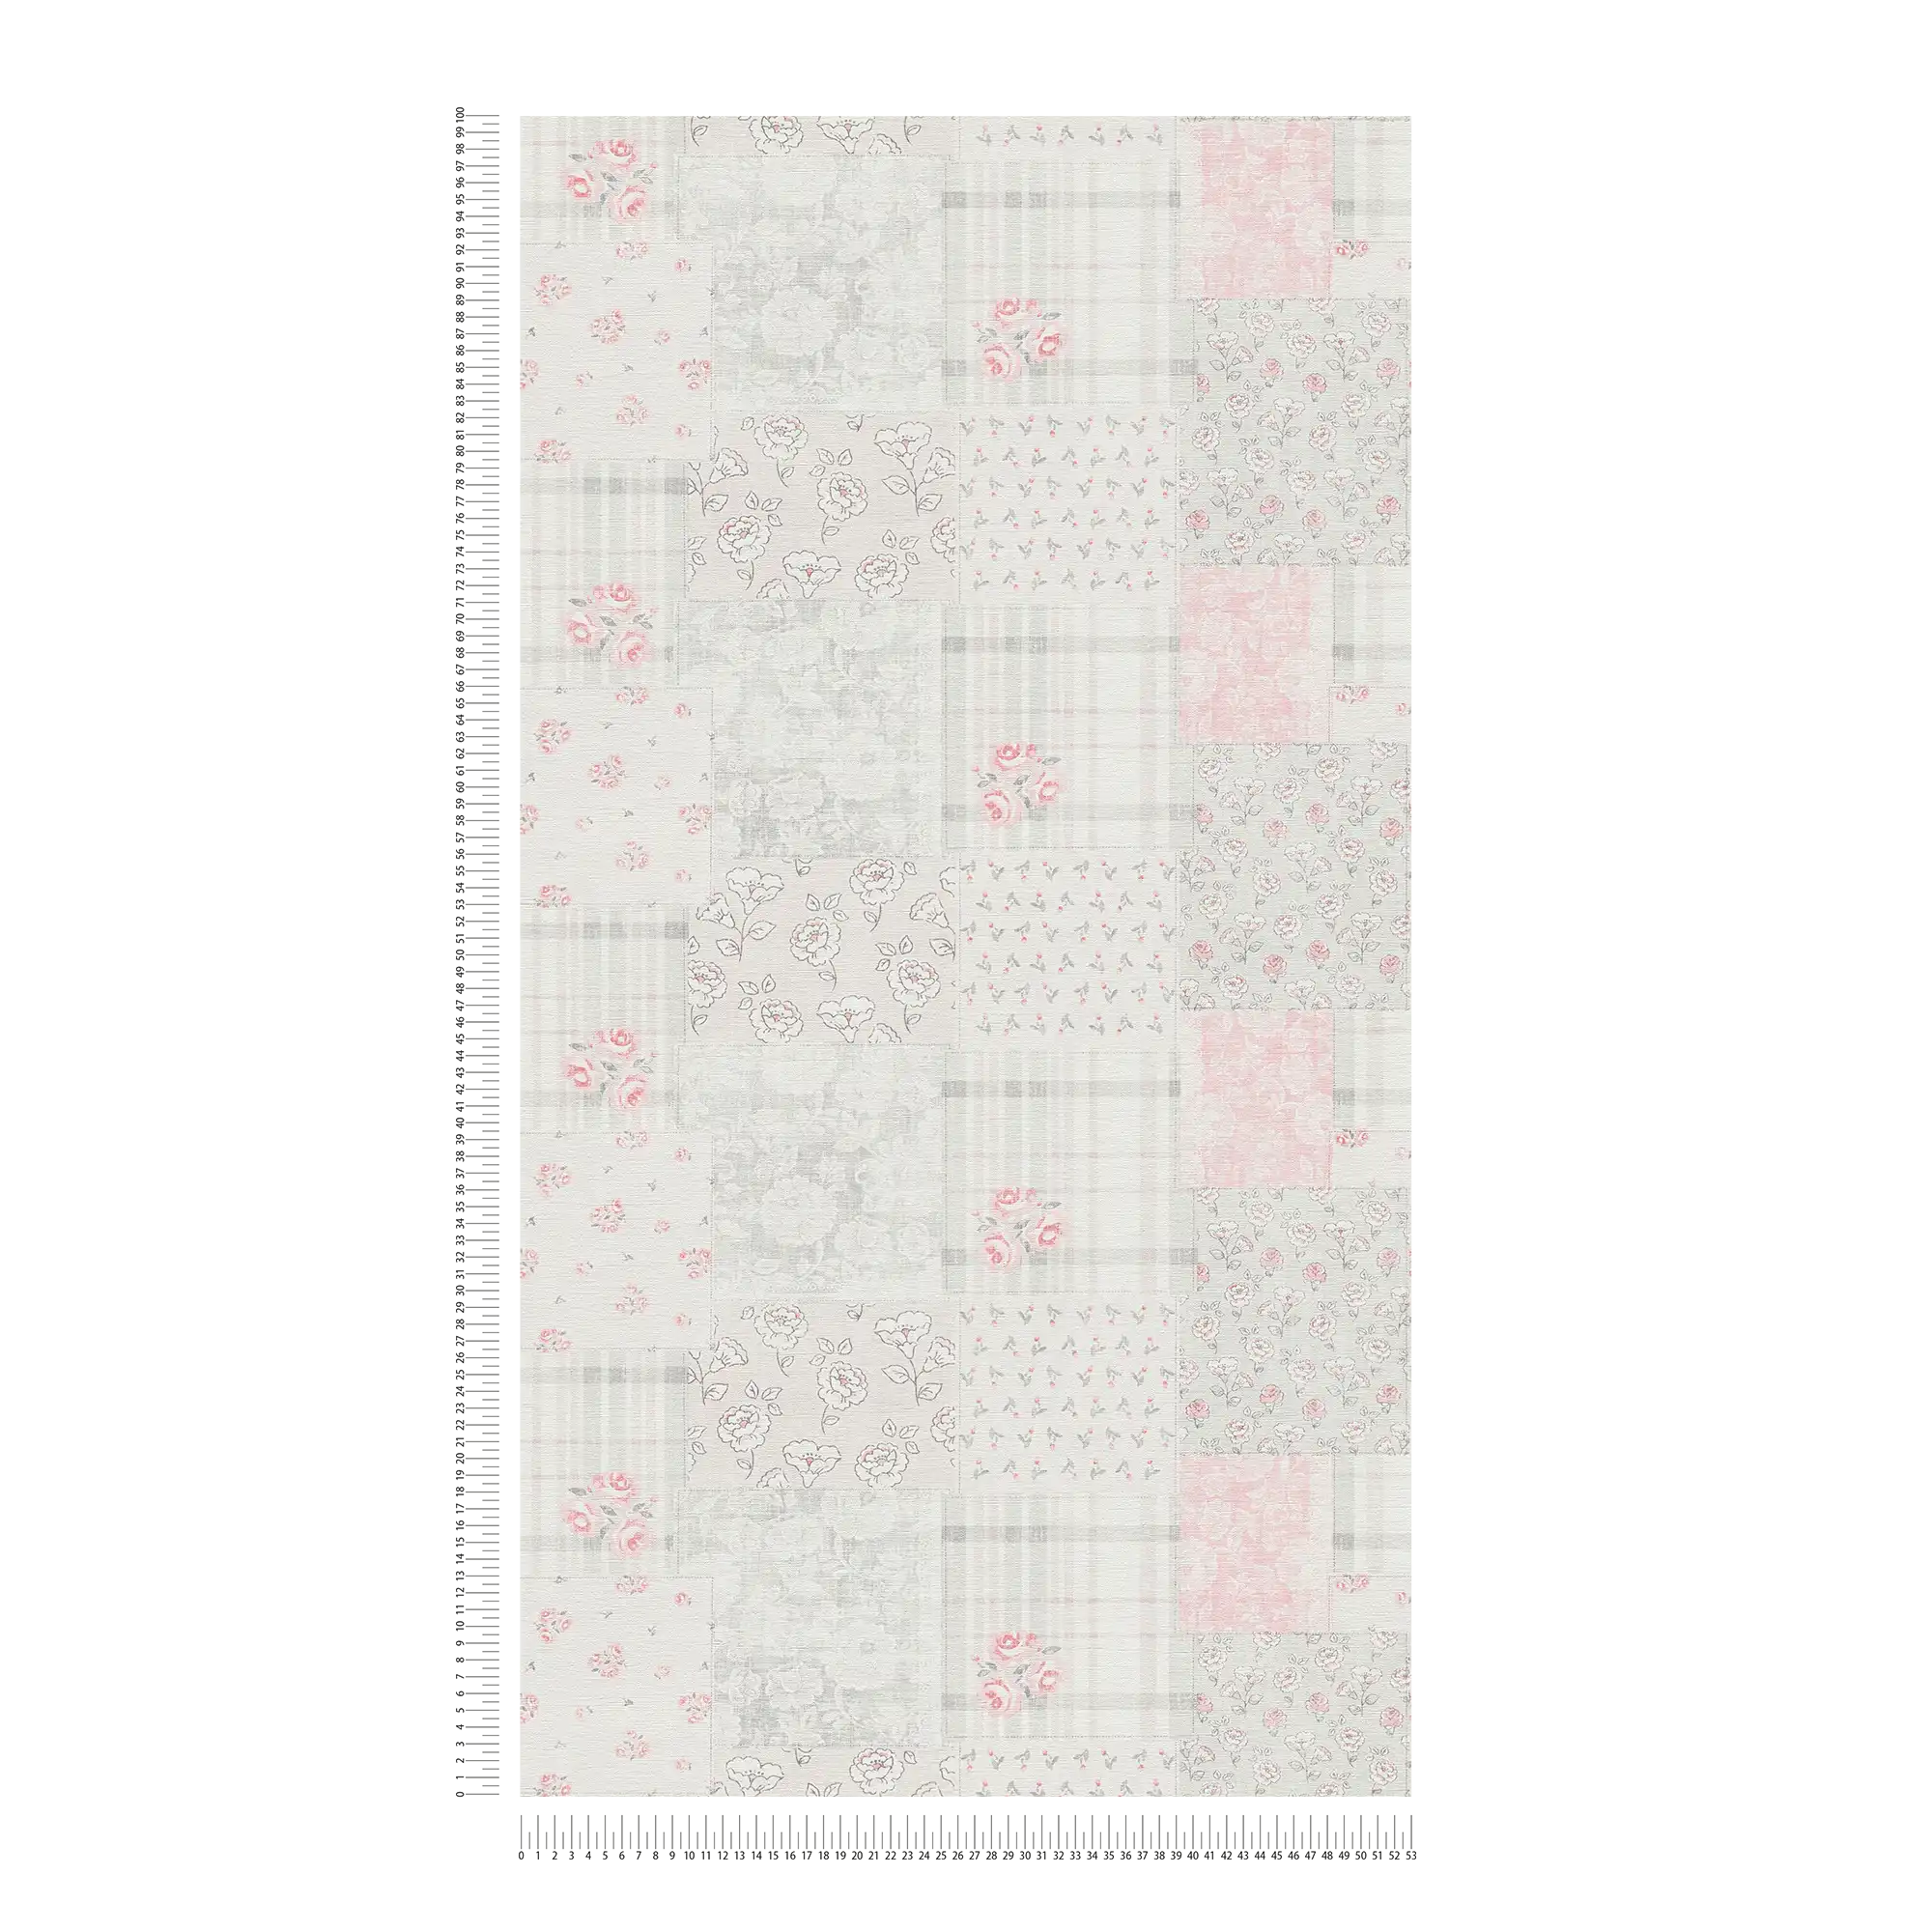             Tapete Landhaus florales und kariertes Muster – Grau, Rot, Weiß
        